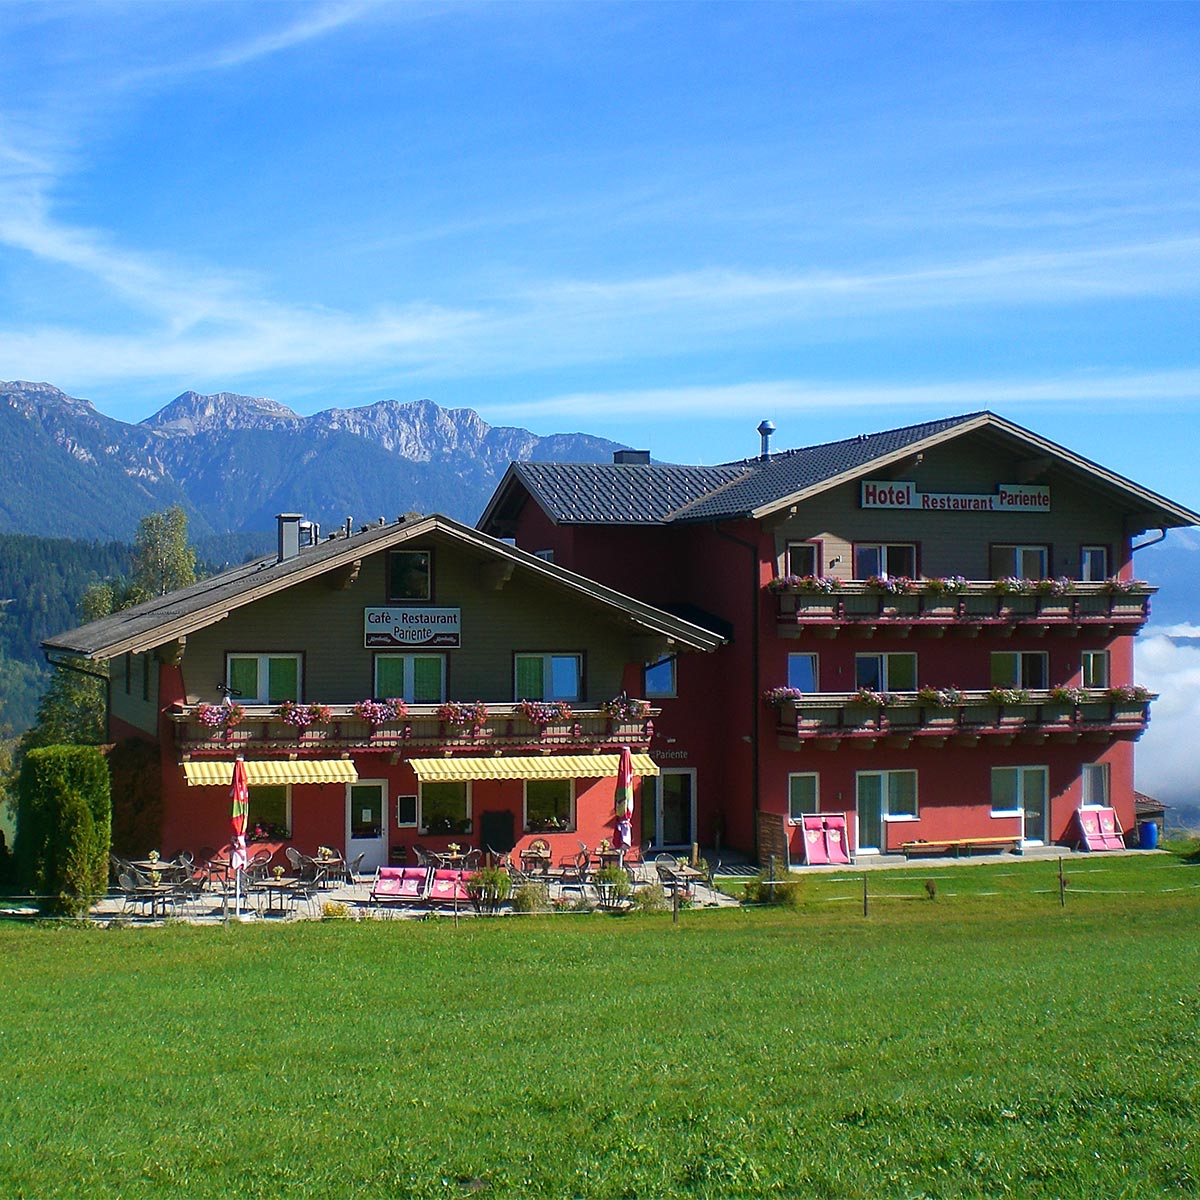 6 Tage Ski Wander Wellness Urlaub Hotel Pariente 3* HP Schladming Rohrmoos - Picture 1 of 1